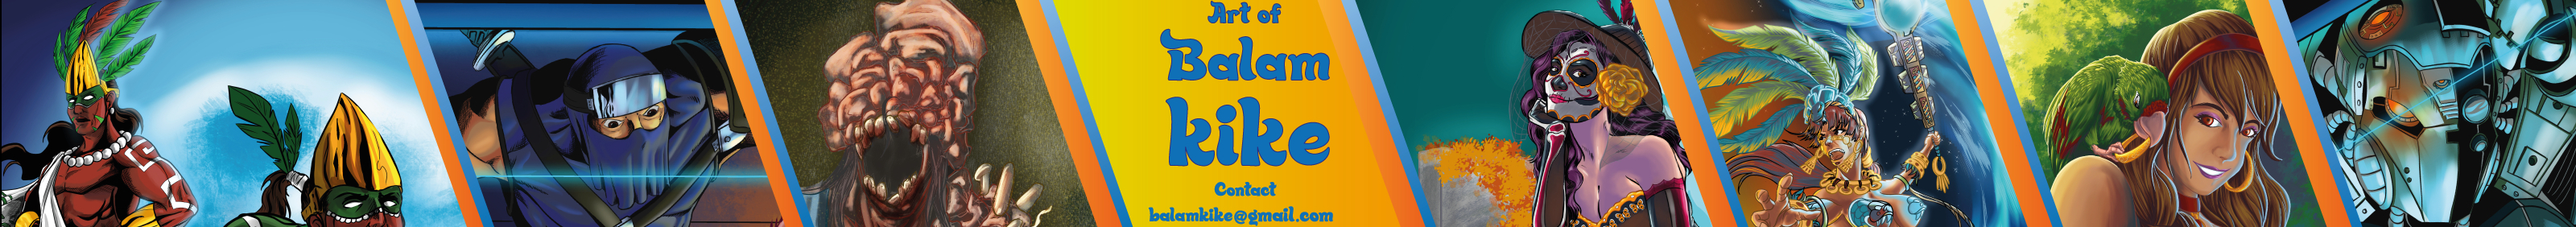 Balam Kikes profilbanner